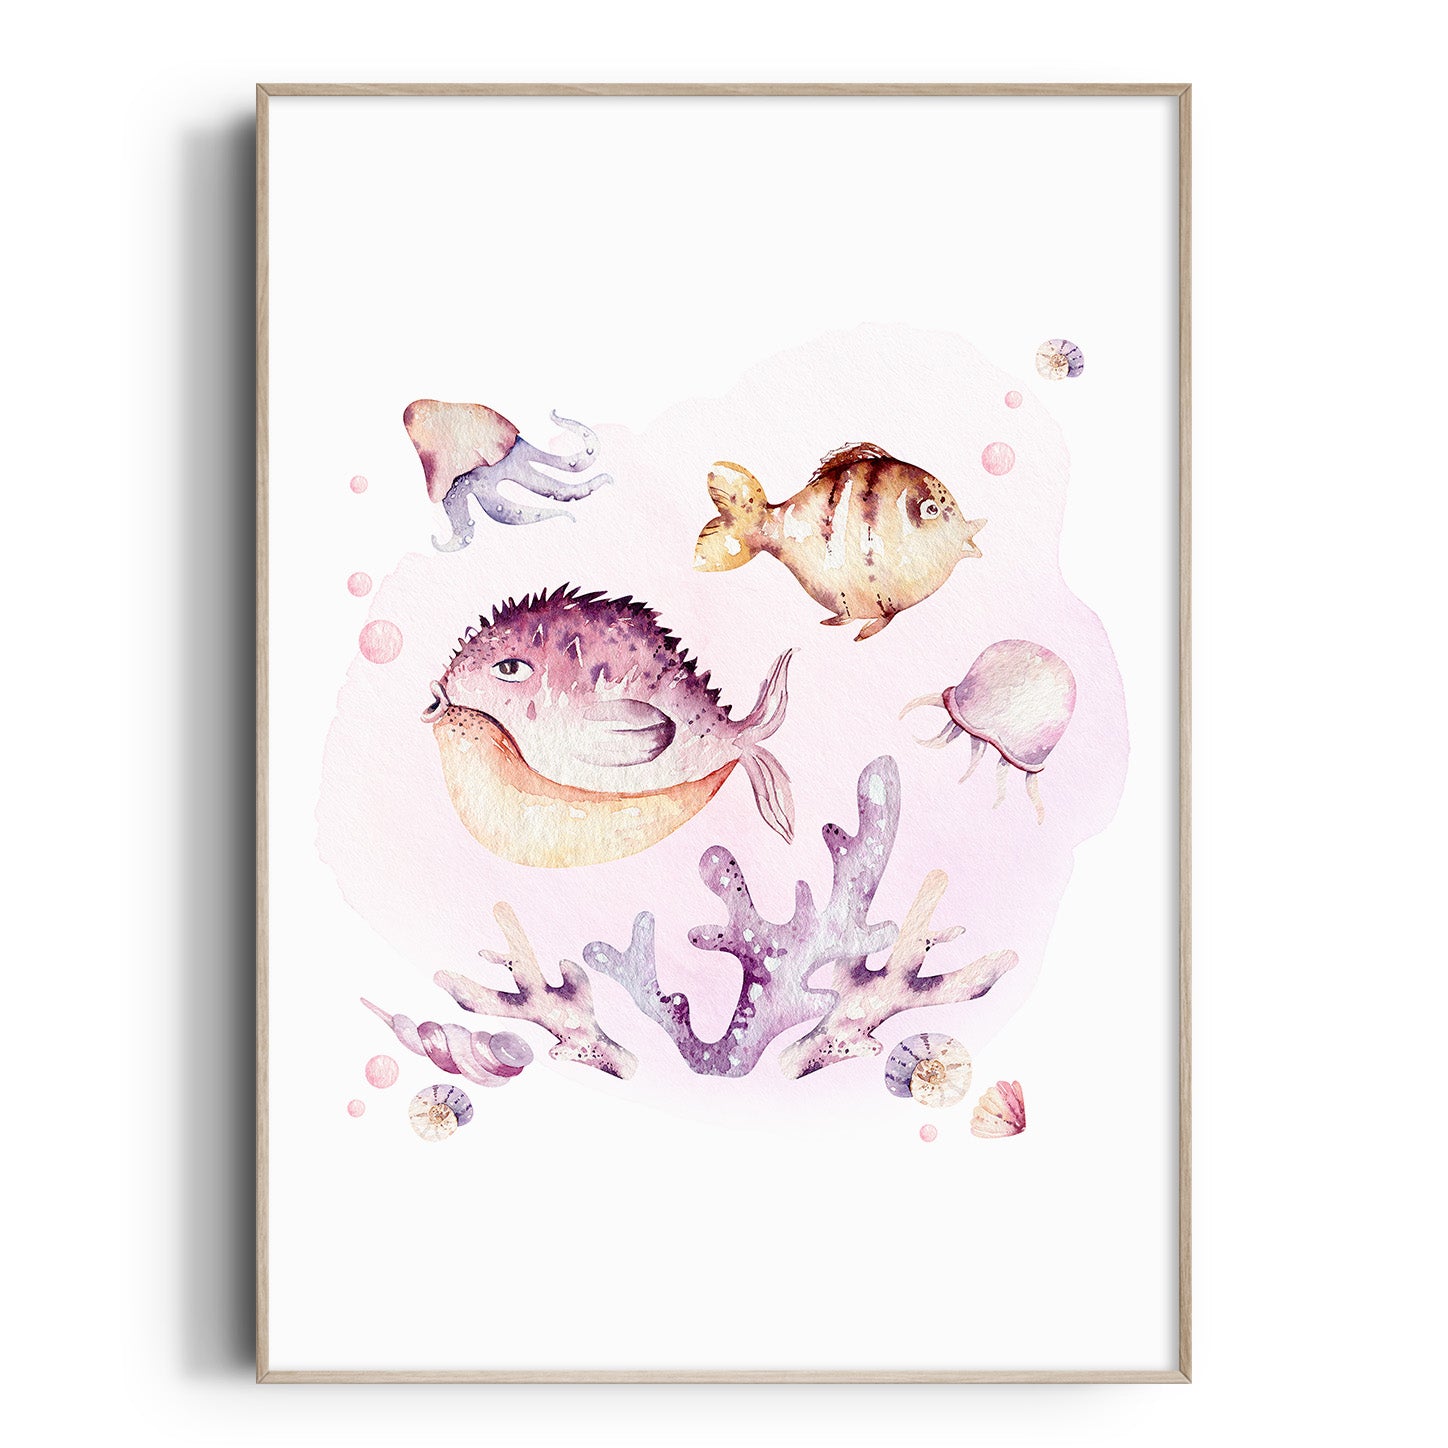 Sea Fish Print